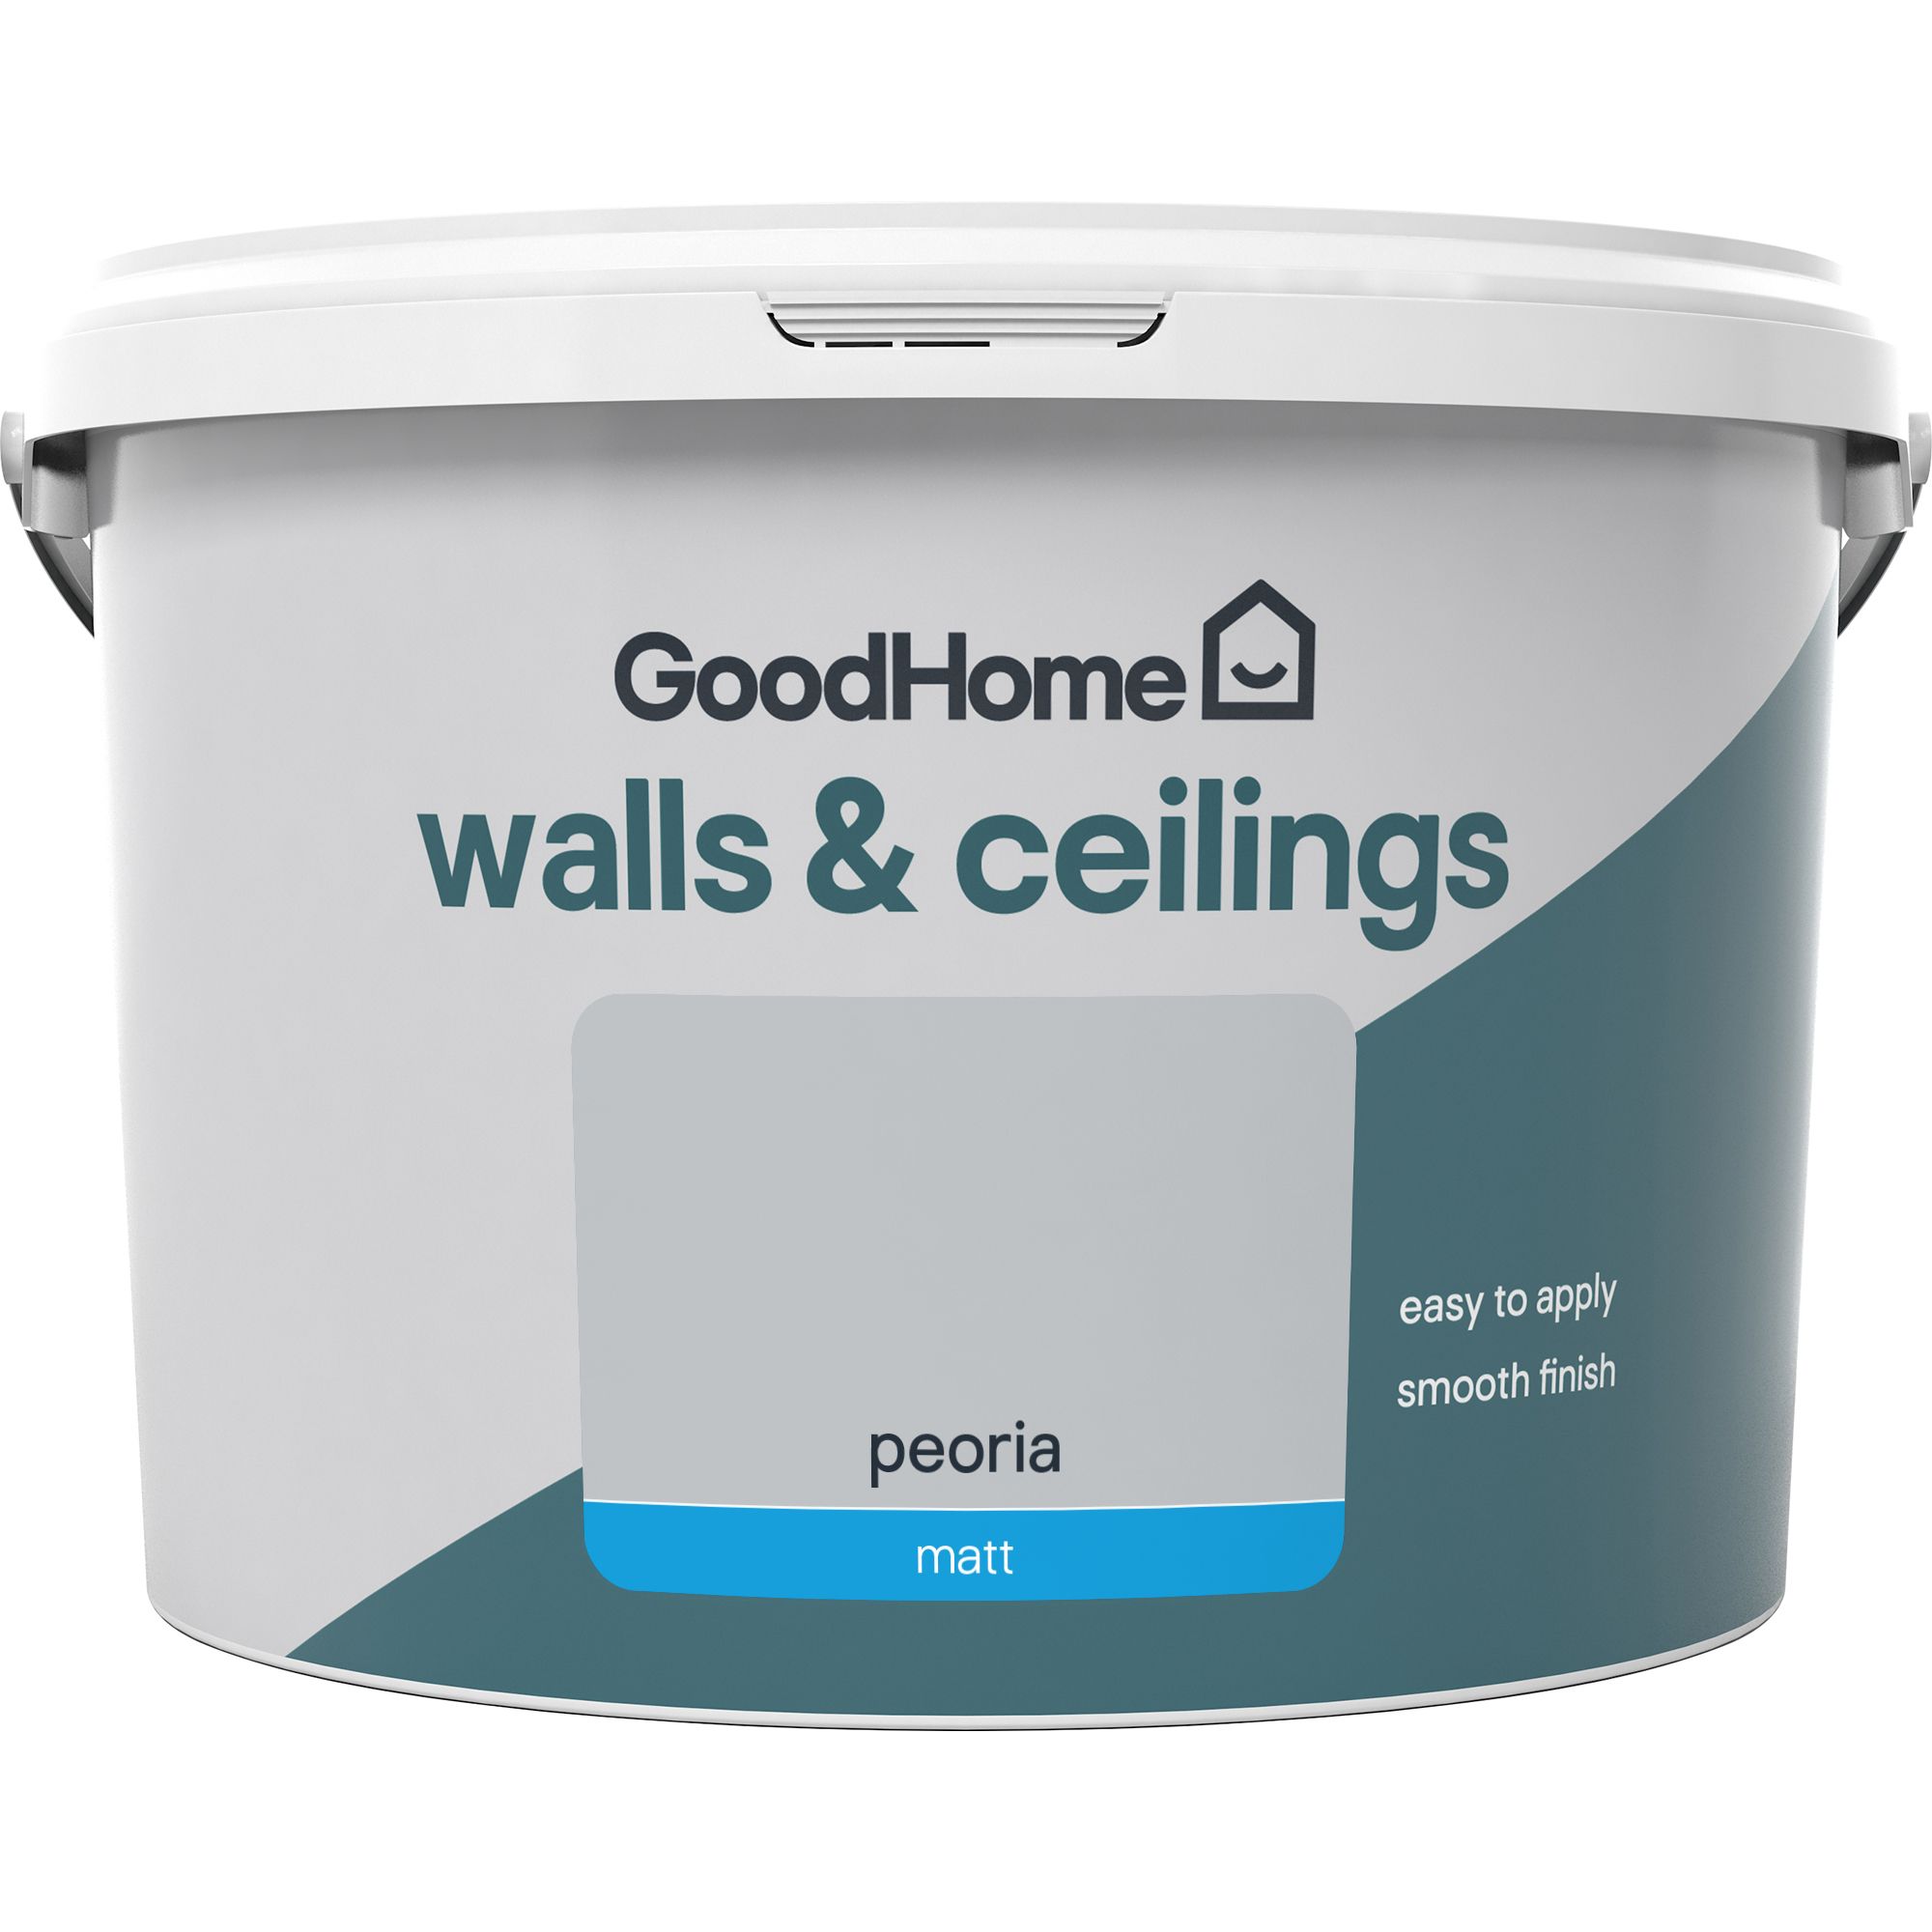 GoodHome Walls & ceilings Peoria Matt Emulsion paint, 2.5L